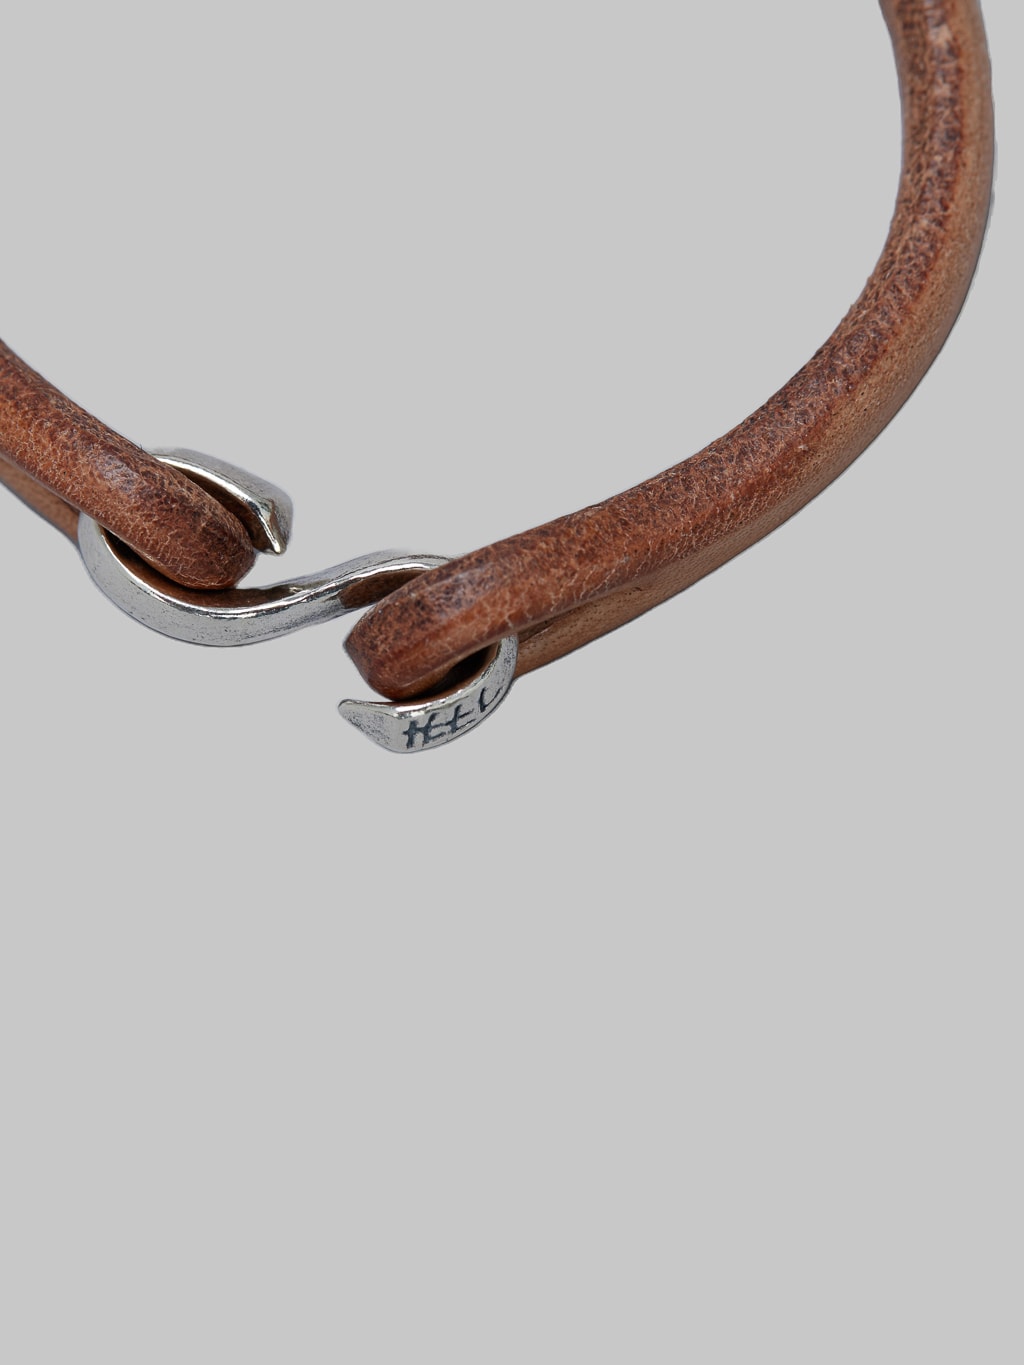 The Flat Head Leather Silver Bracelet Tan clasp finish